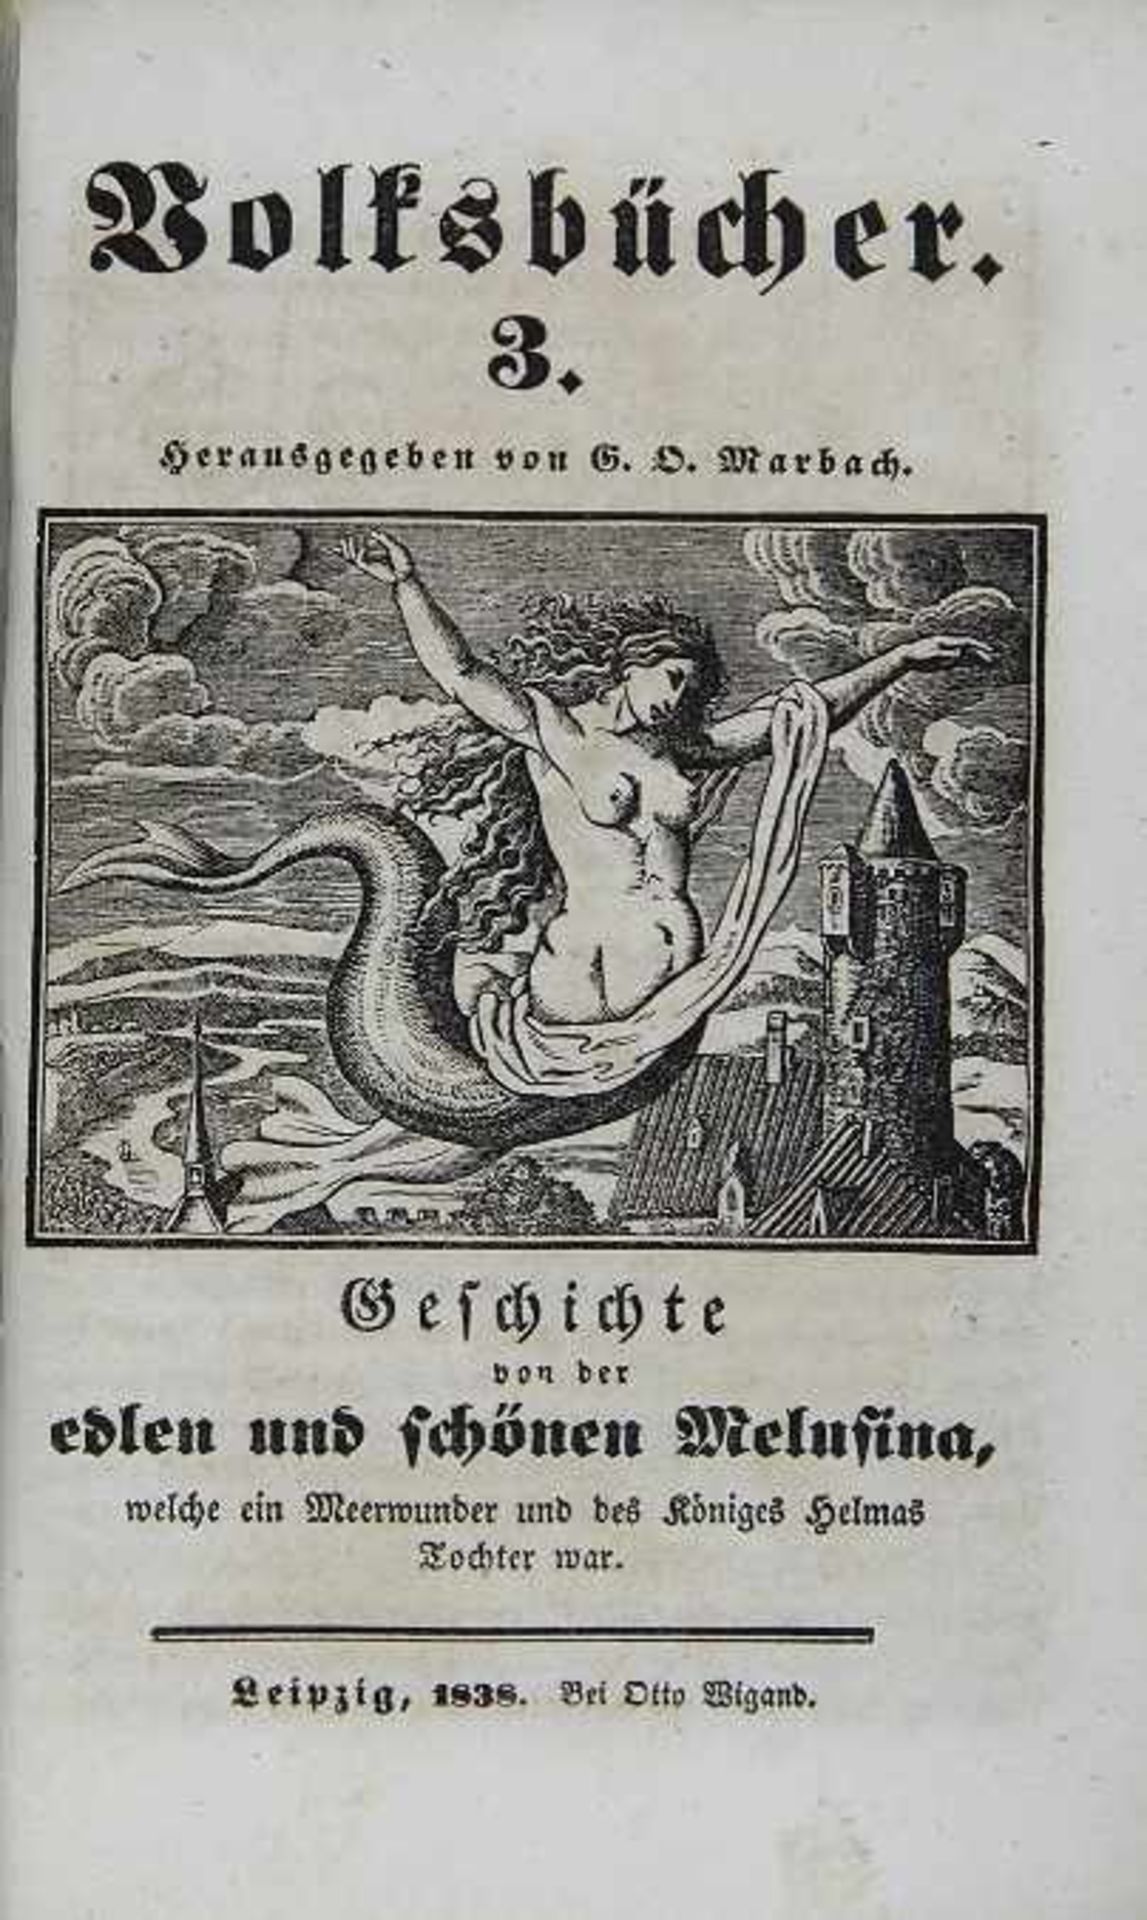 Marbach, G. O.: "Volksbücher" - Image 3 of 6